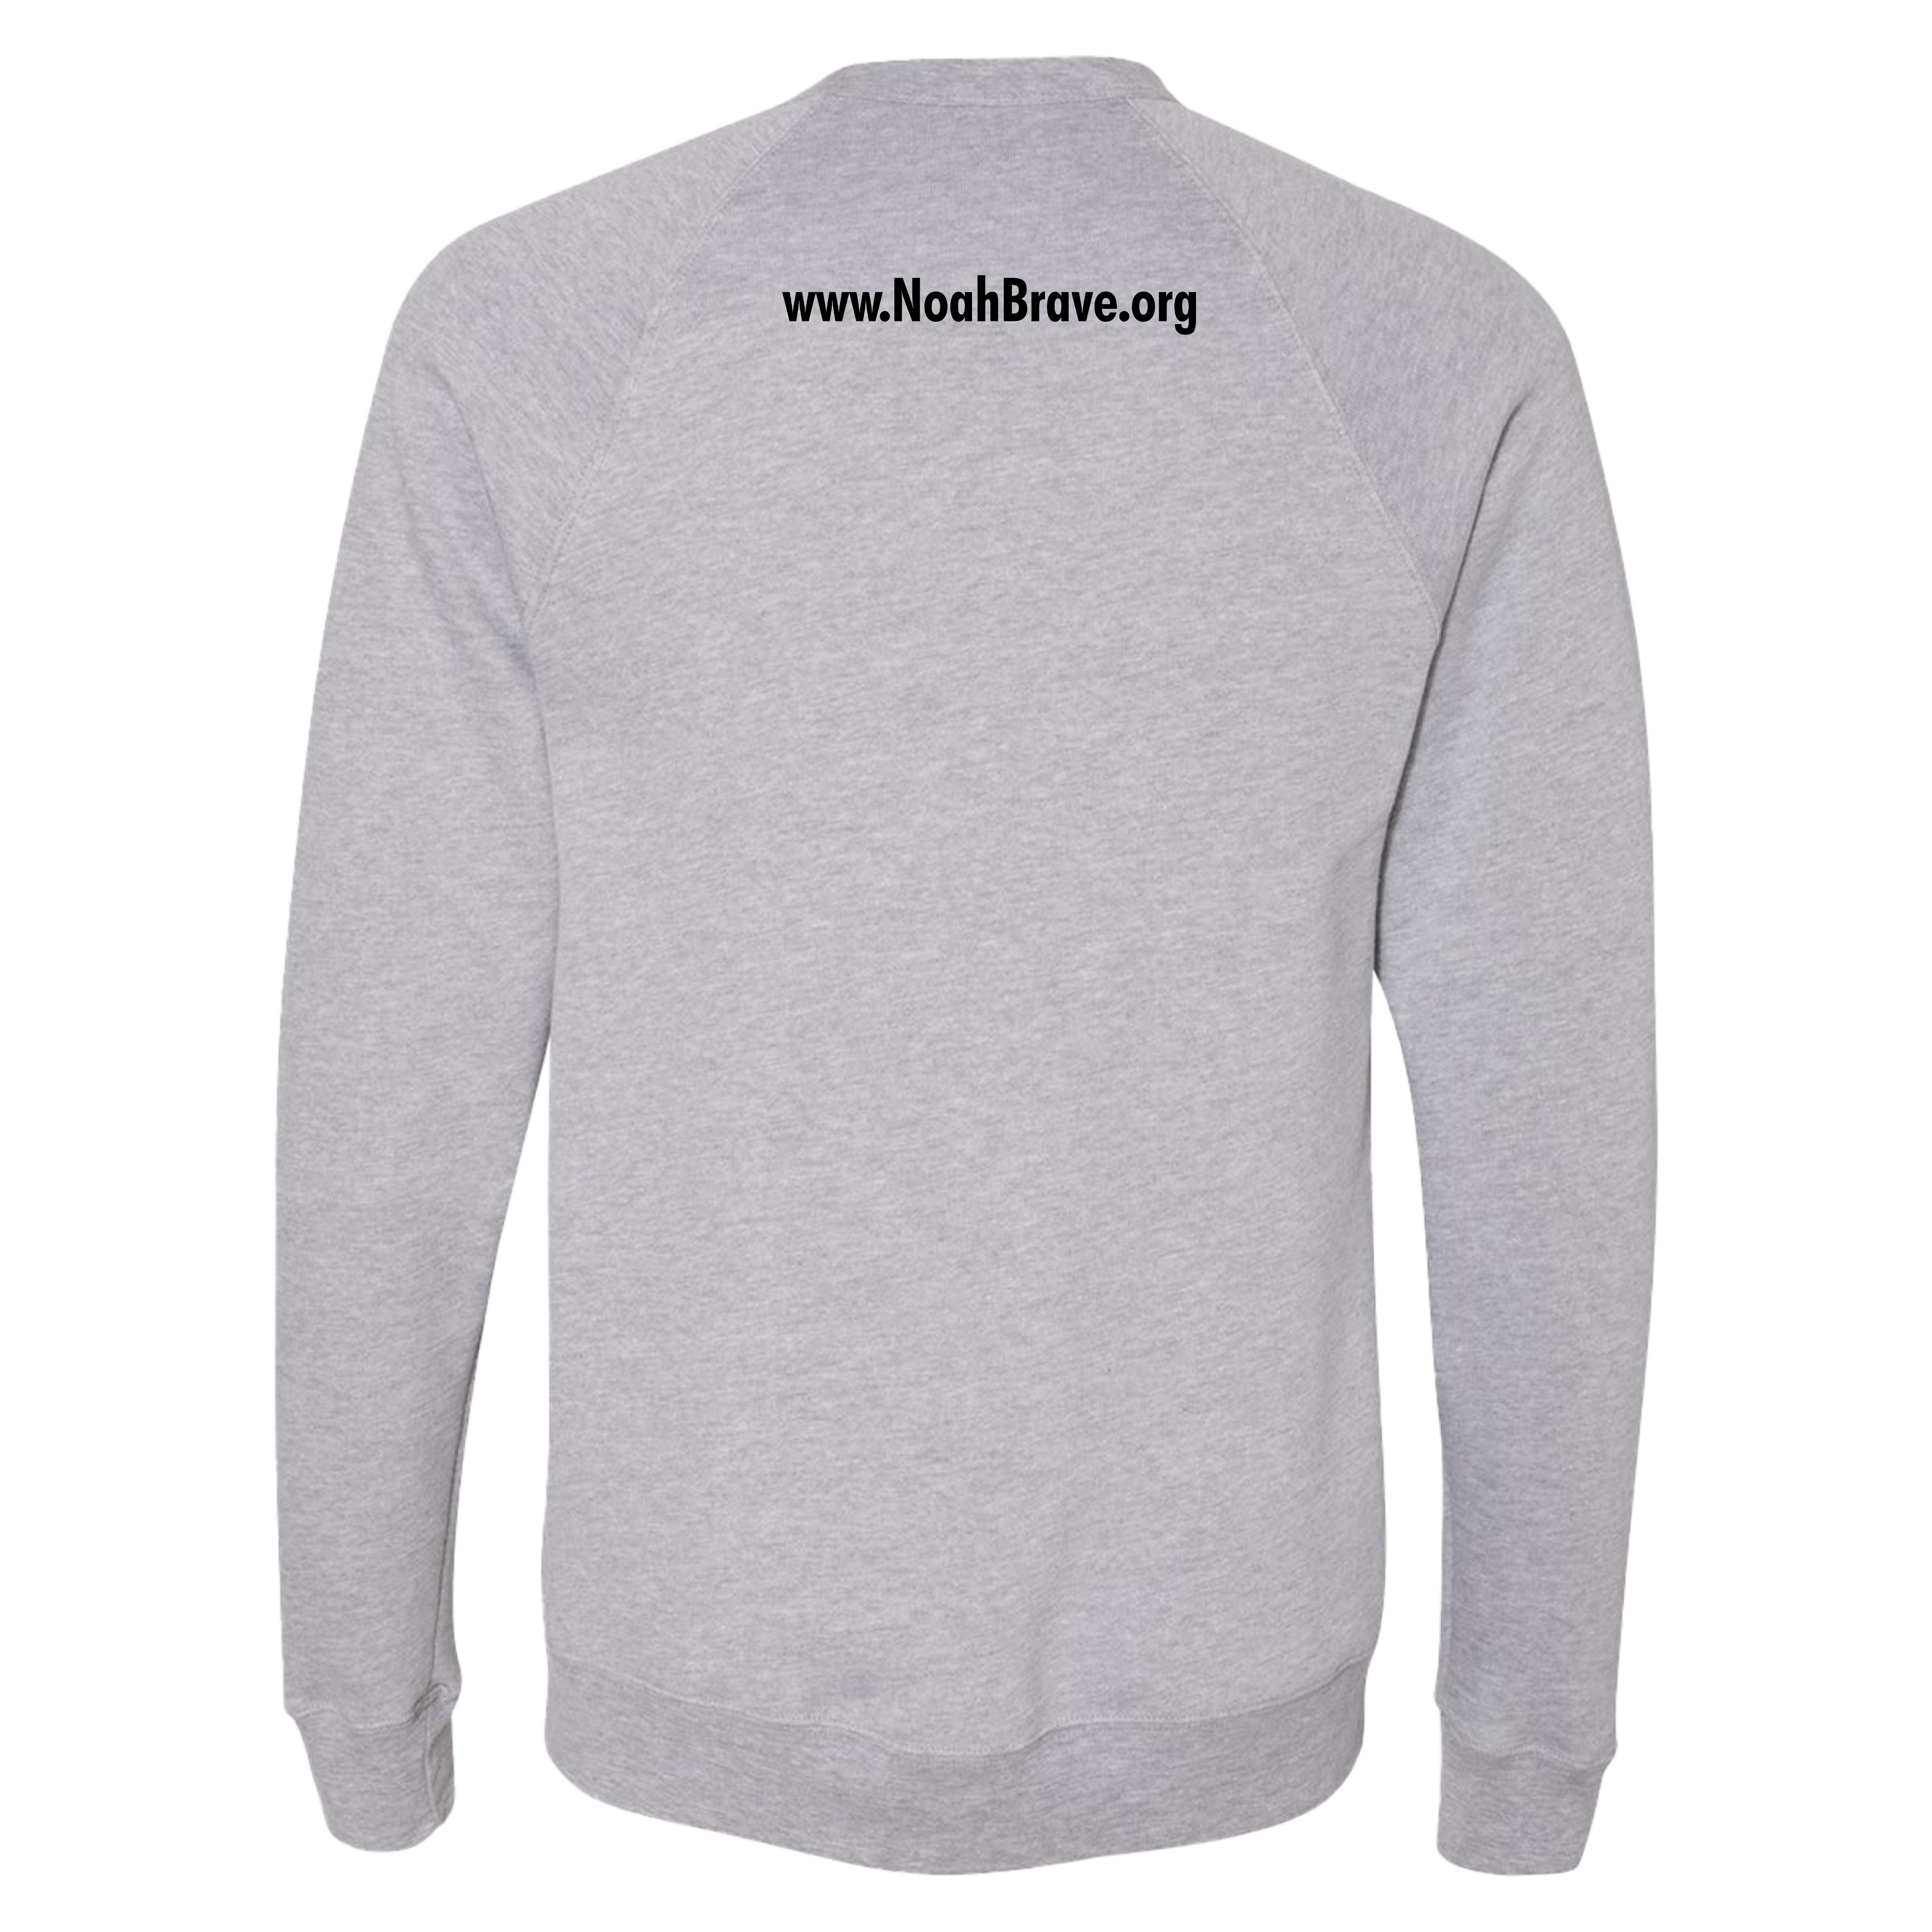 NoahBRAVE Foundation - Crewneck Sweatshirt